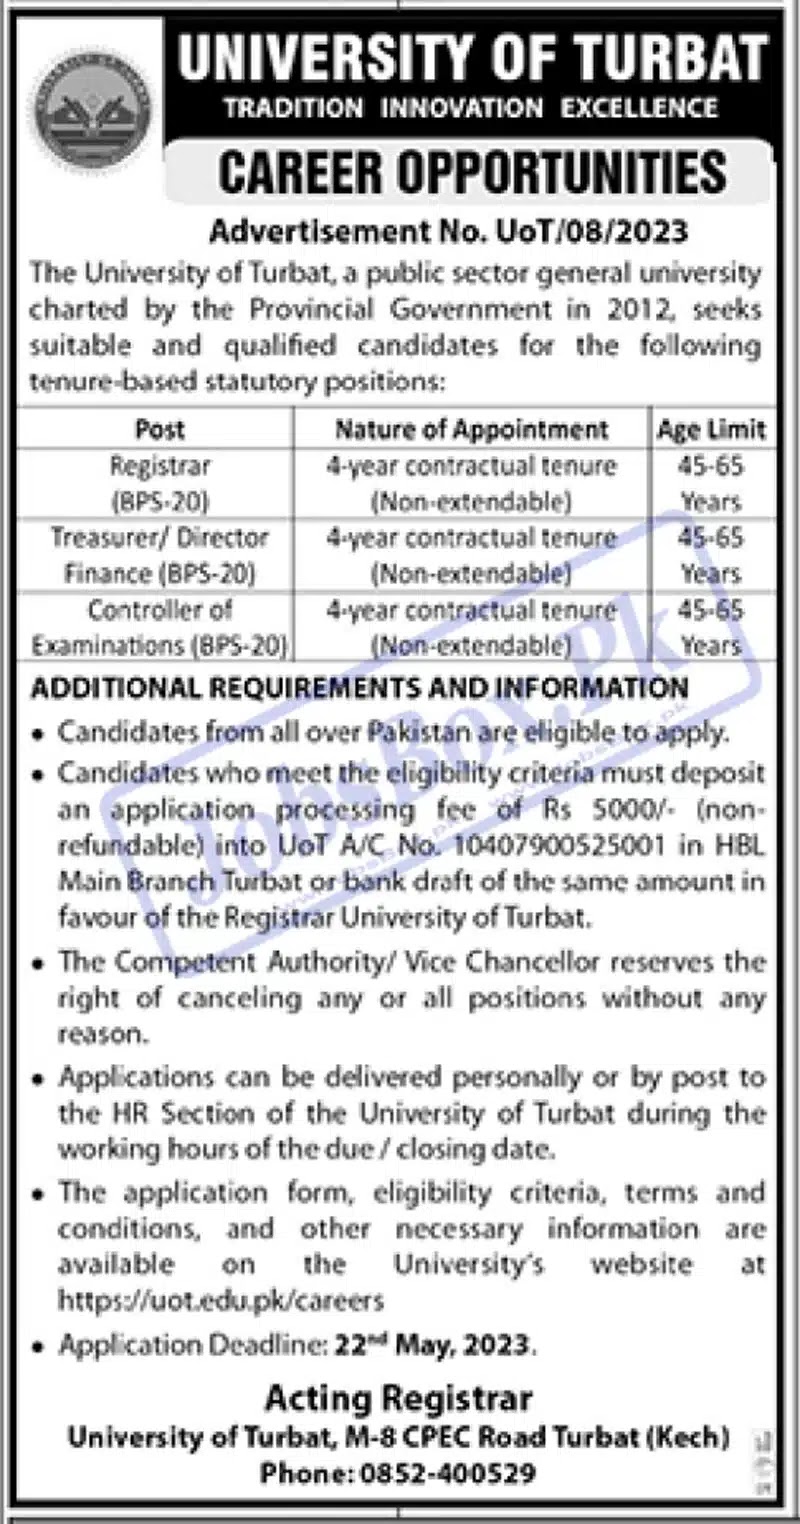 University of Turbat UOT Jobs 2023 – Application Form via www.uot.edu.pk